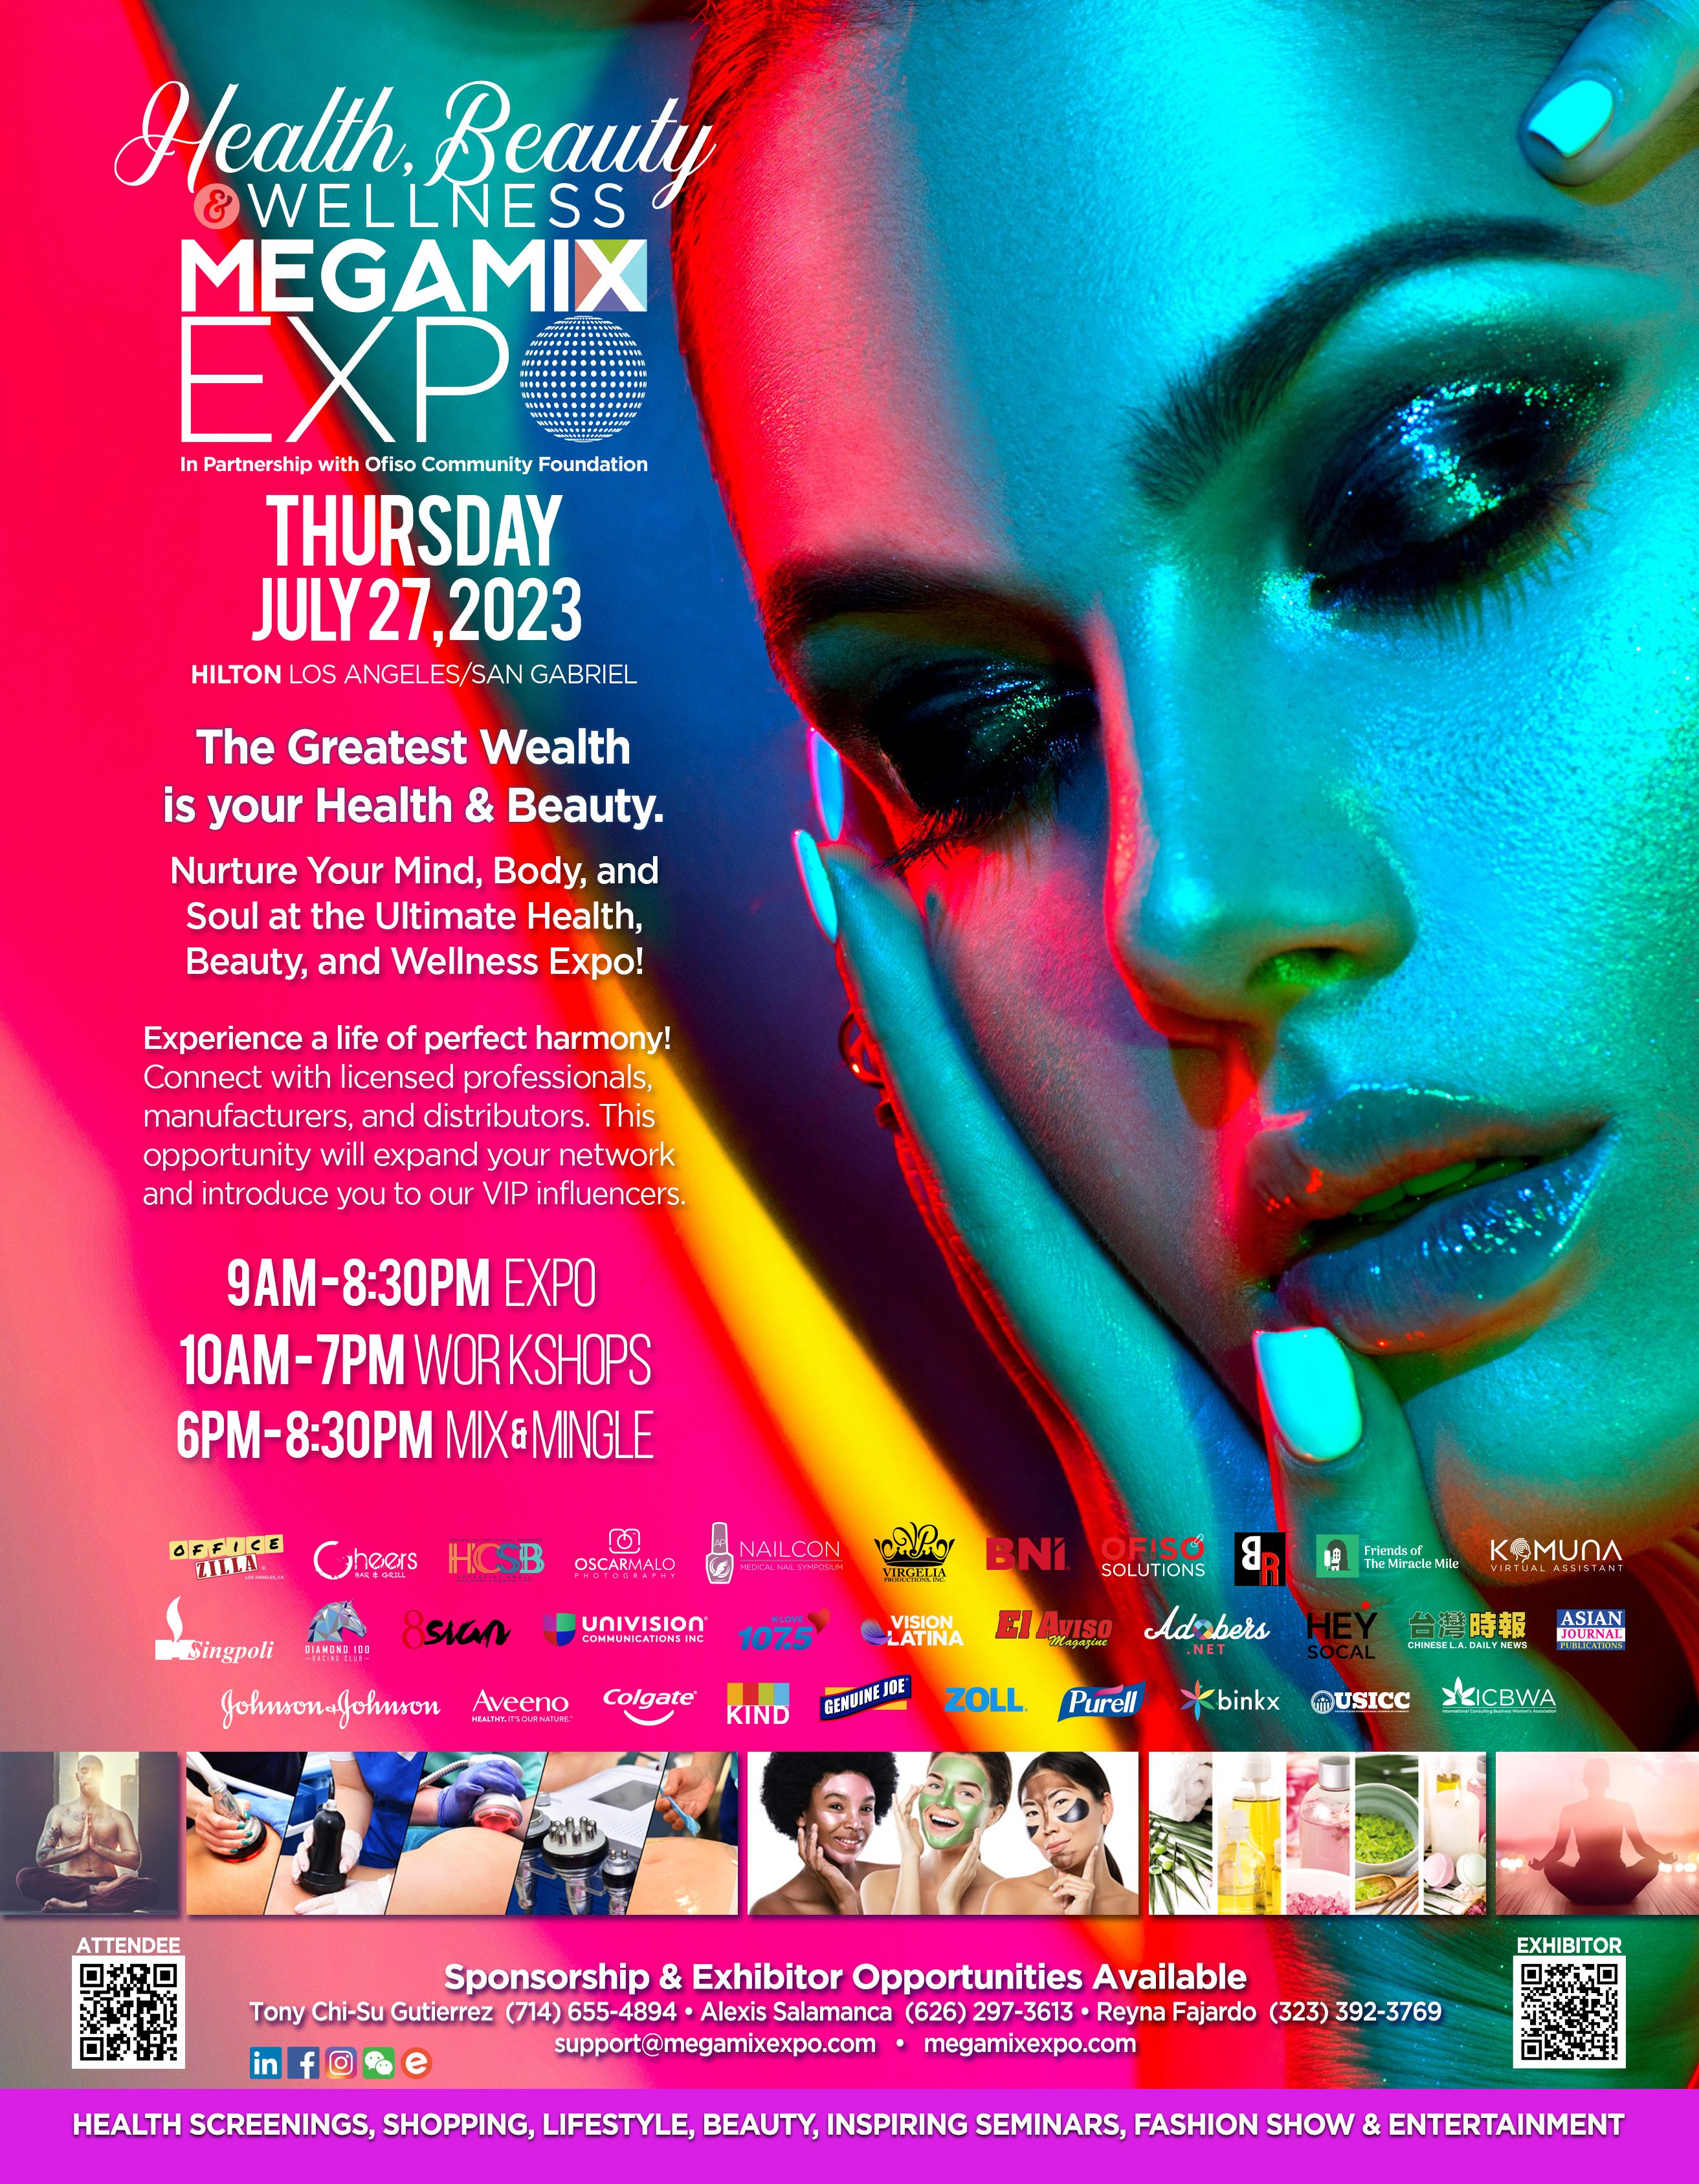 Hilton Los Angeles San Gabriel Hosts the 2023 Health Beauty and Wellness MegaMix Expo on July 27th